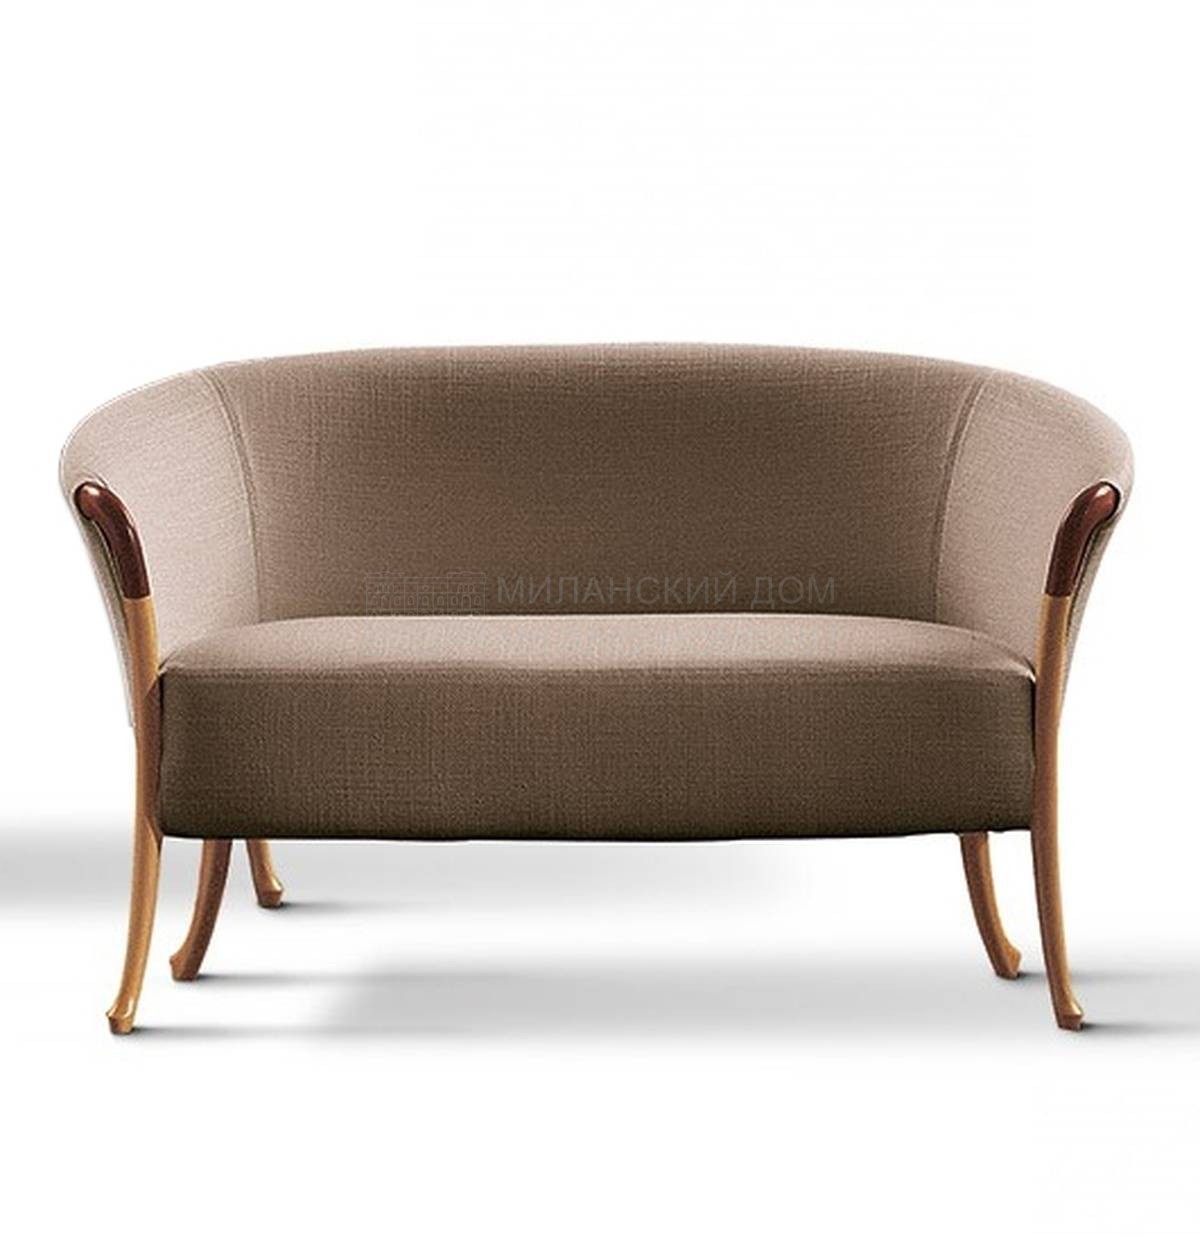 Прямой диван Progetti Original Sofa / 63222 из Италии фабрики GIORGETTI